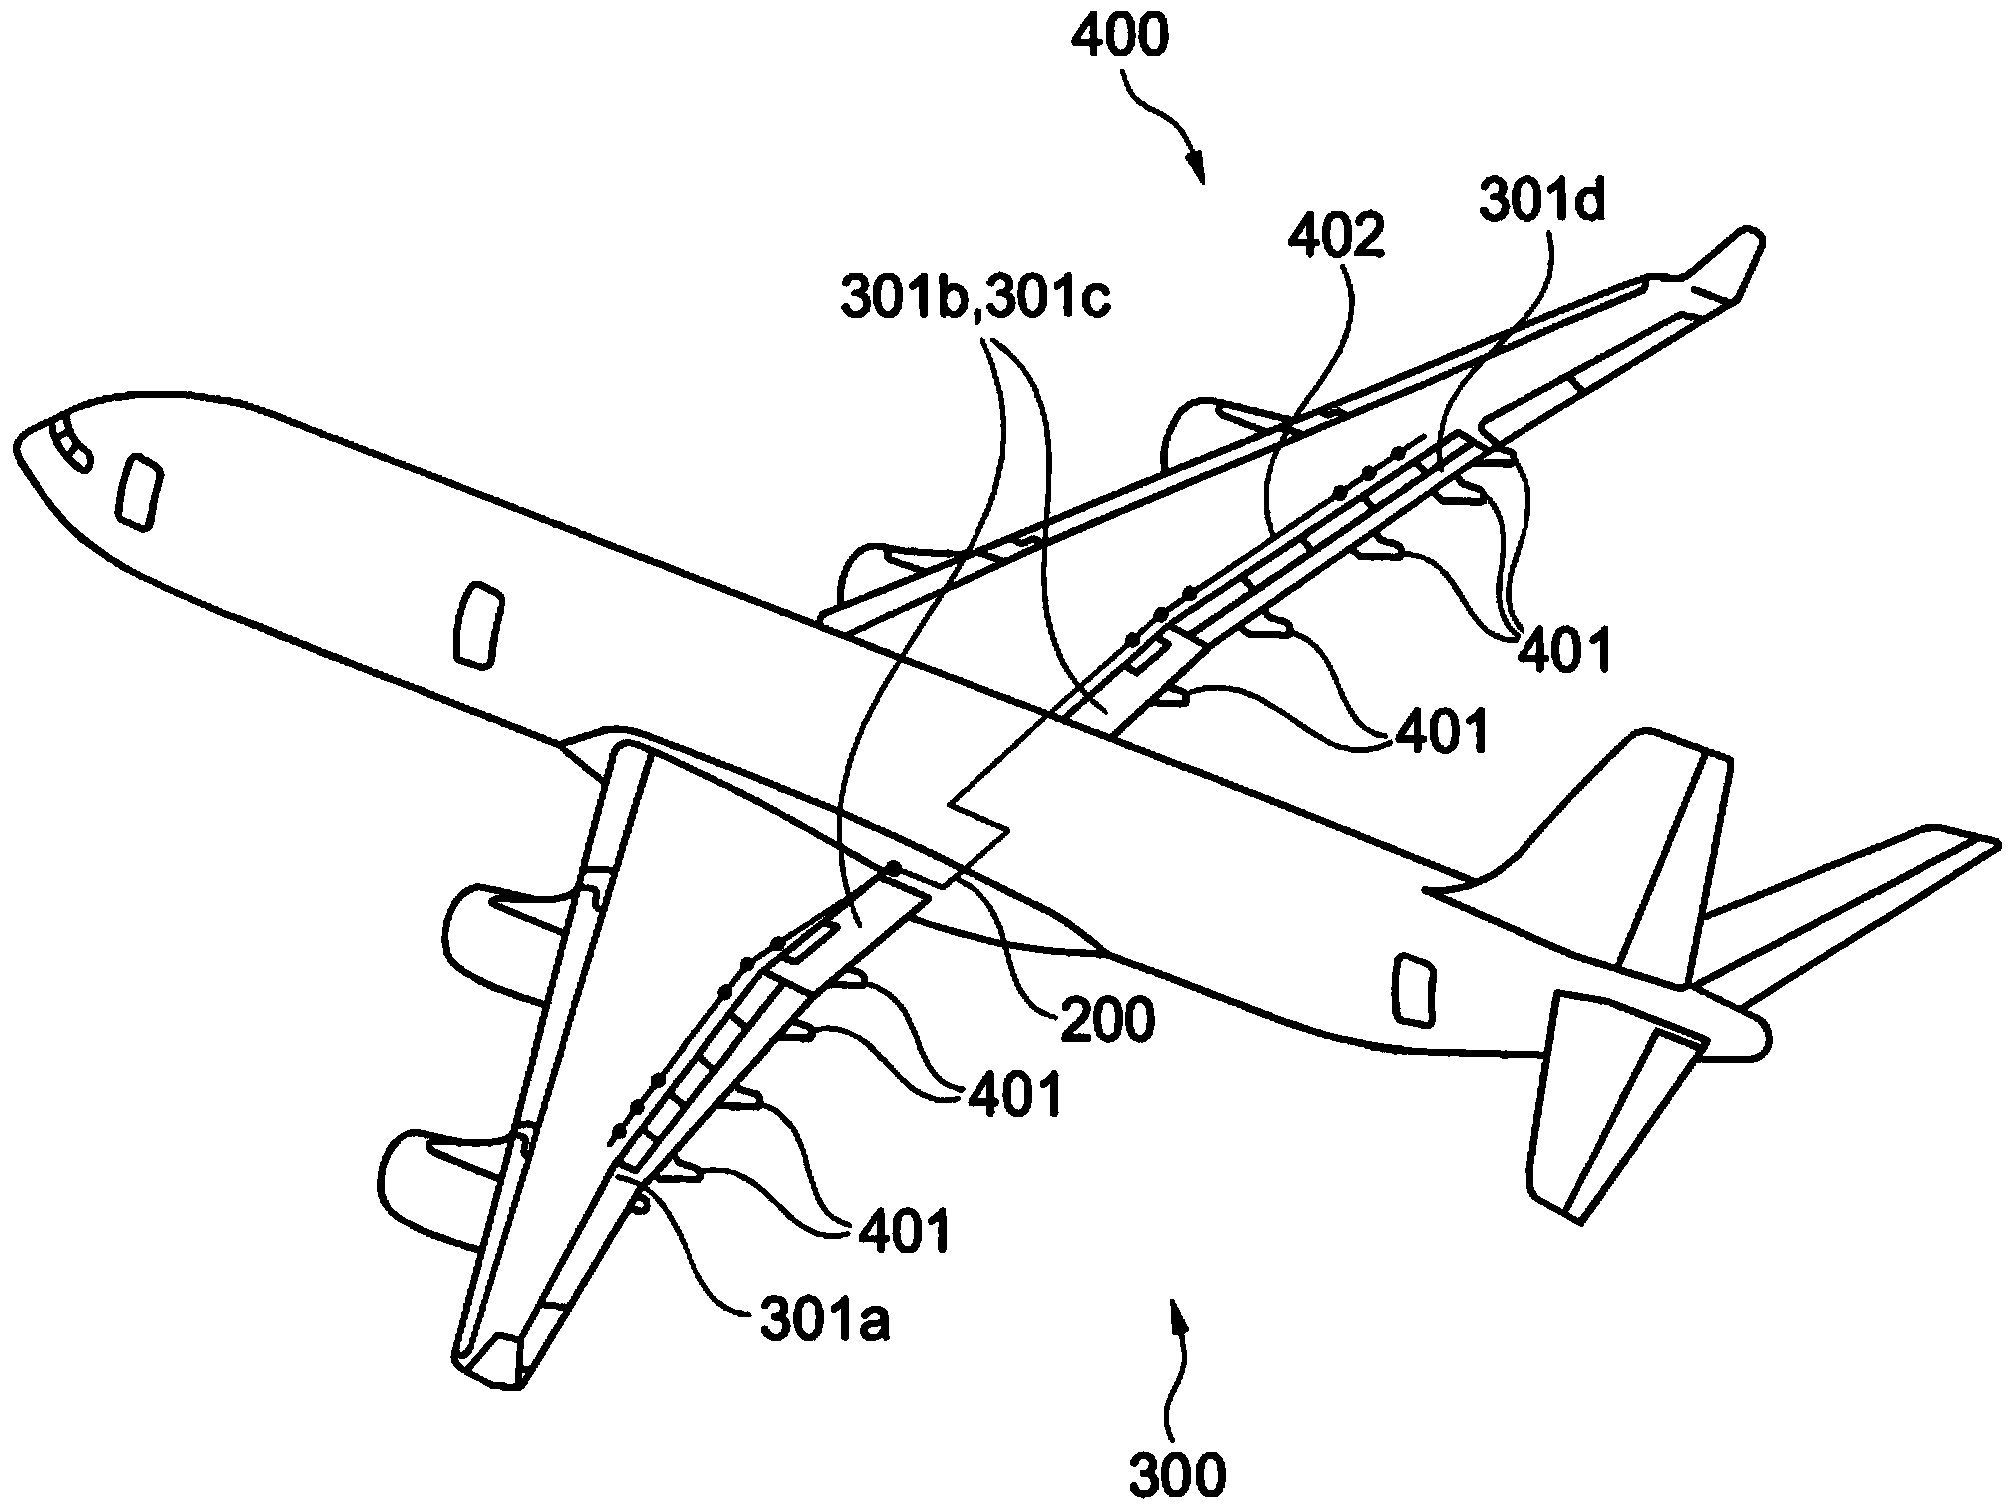 High lift system for an aircraft